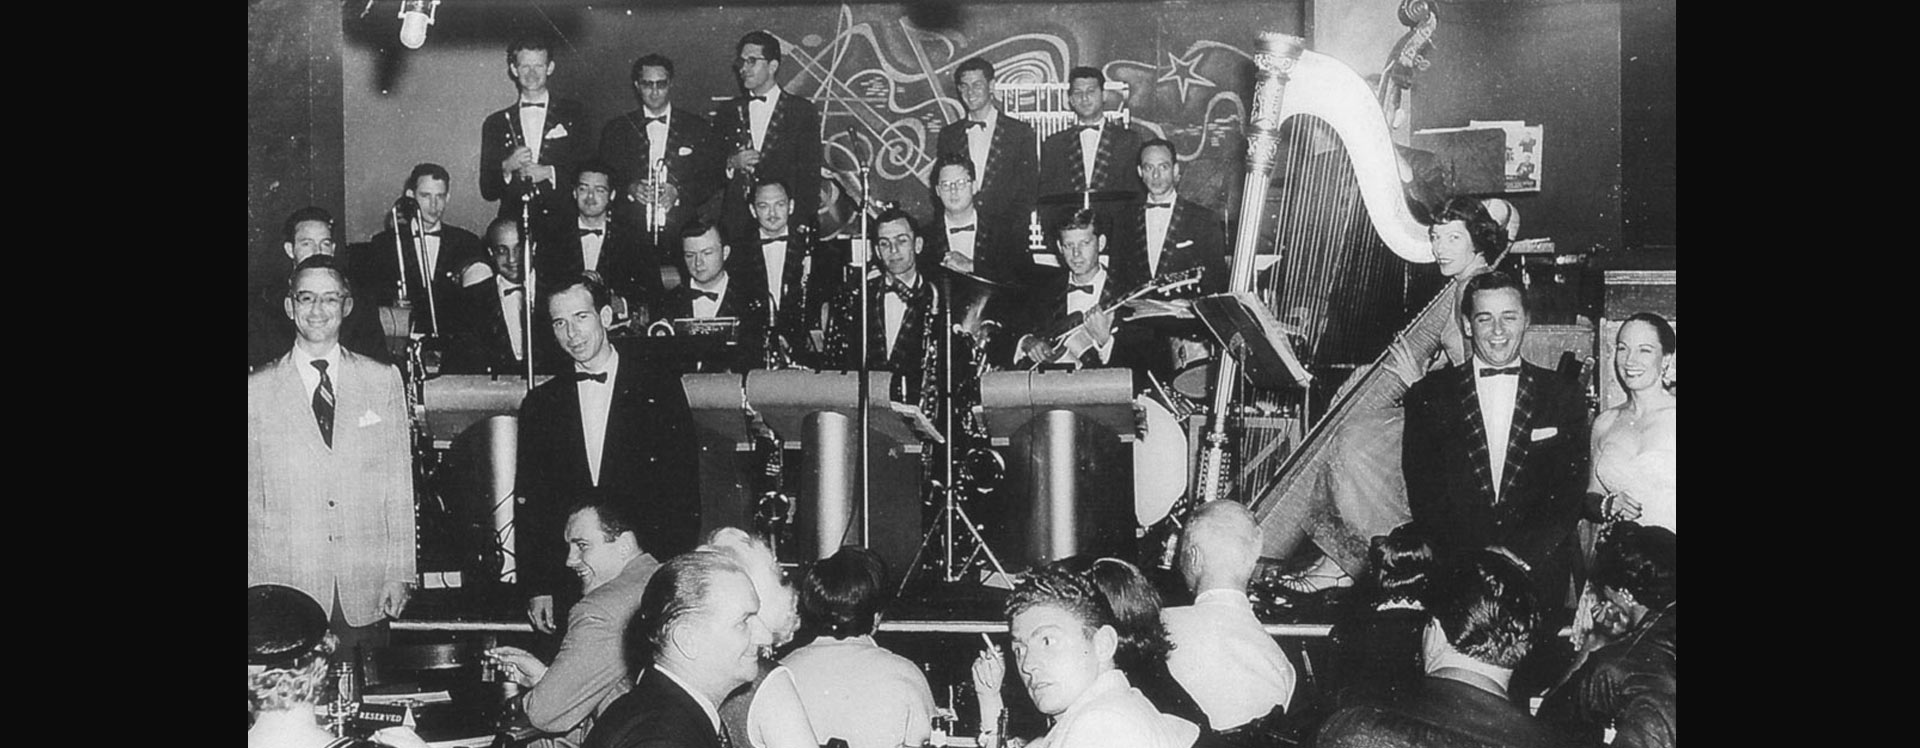 The Sauter-Finegan Orchestra at the Blue Note circa 1953.